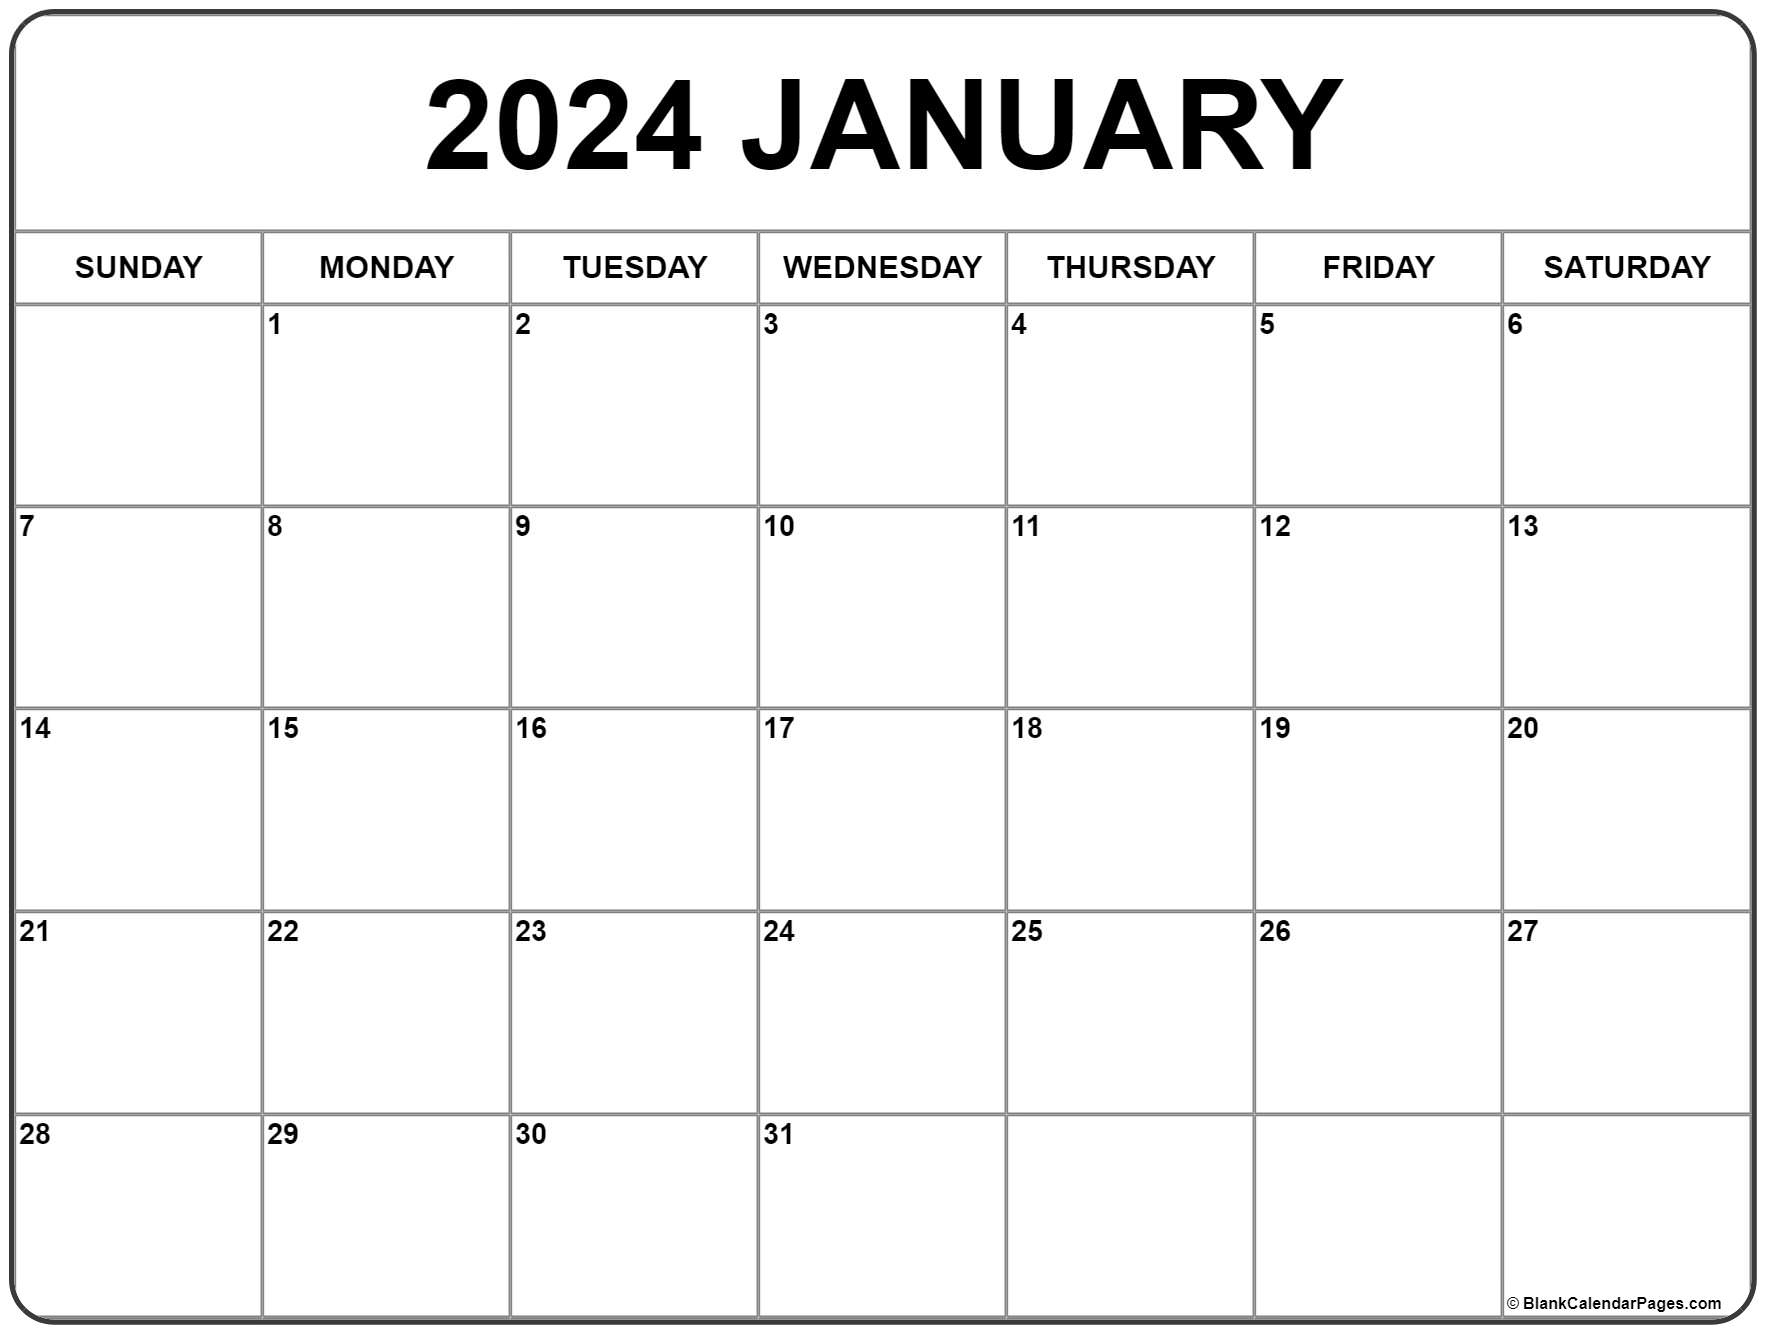 January 2024 Calendar | Free Printable Calendar | Monthly Calendar 2024